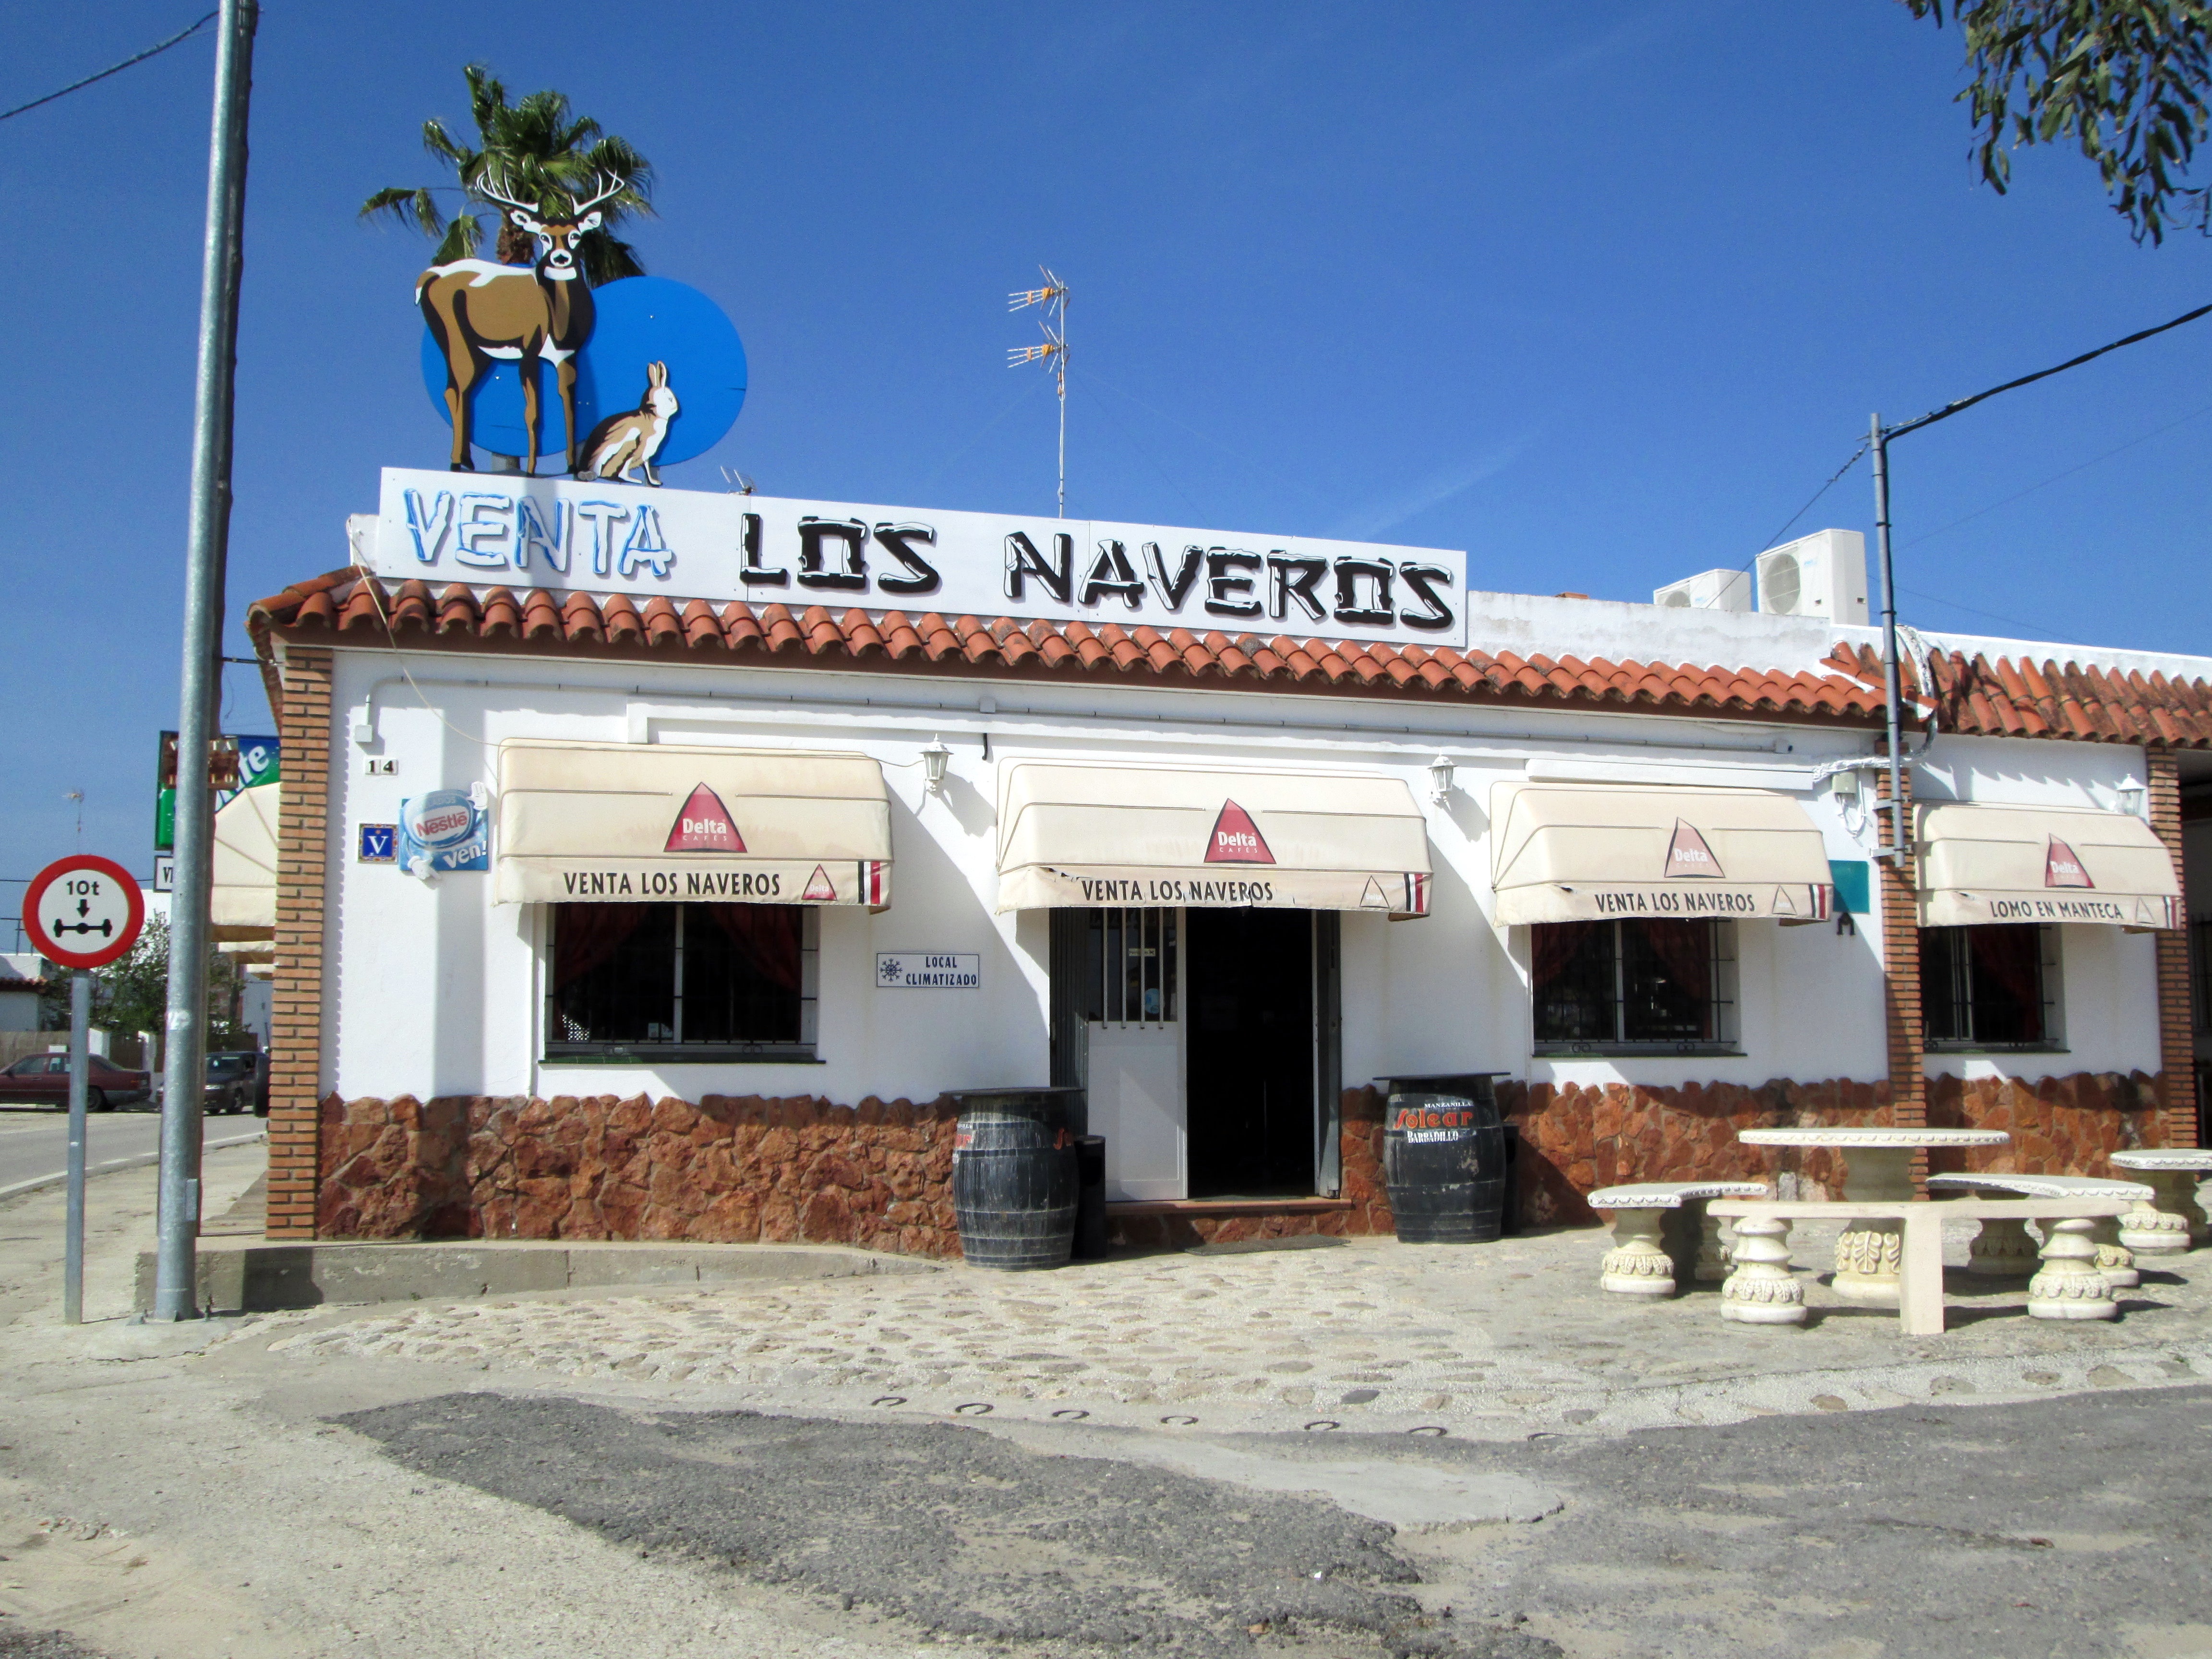 Foto: Venta Los Naveros - Naveros (Cádiz), España